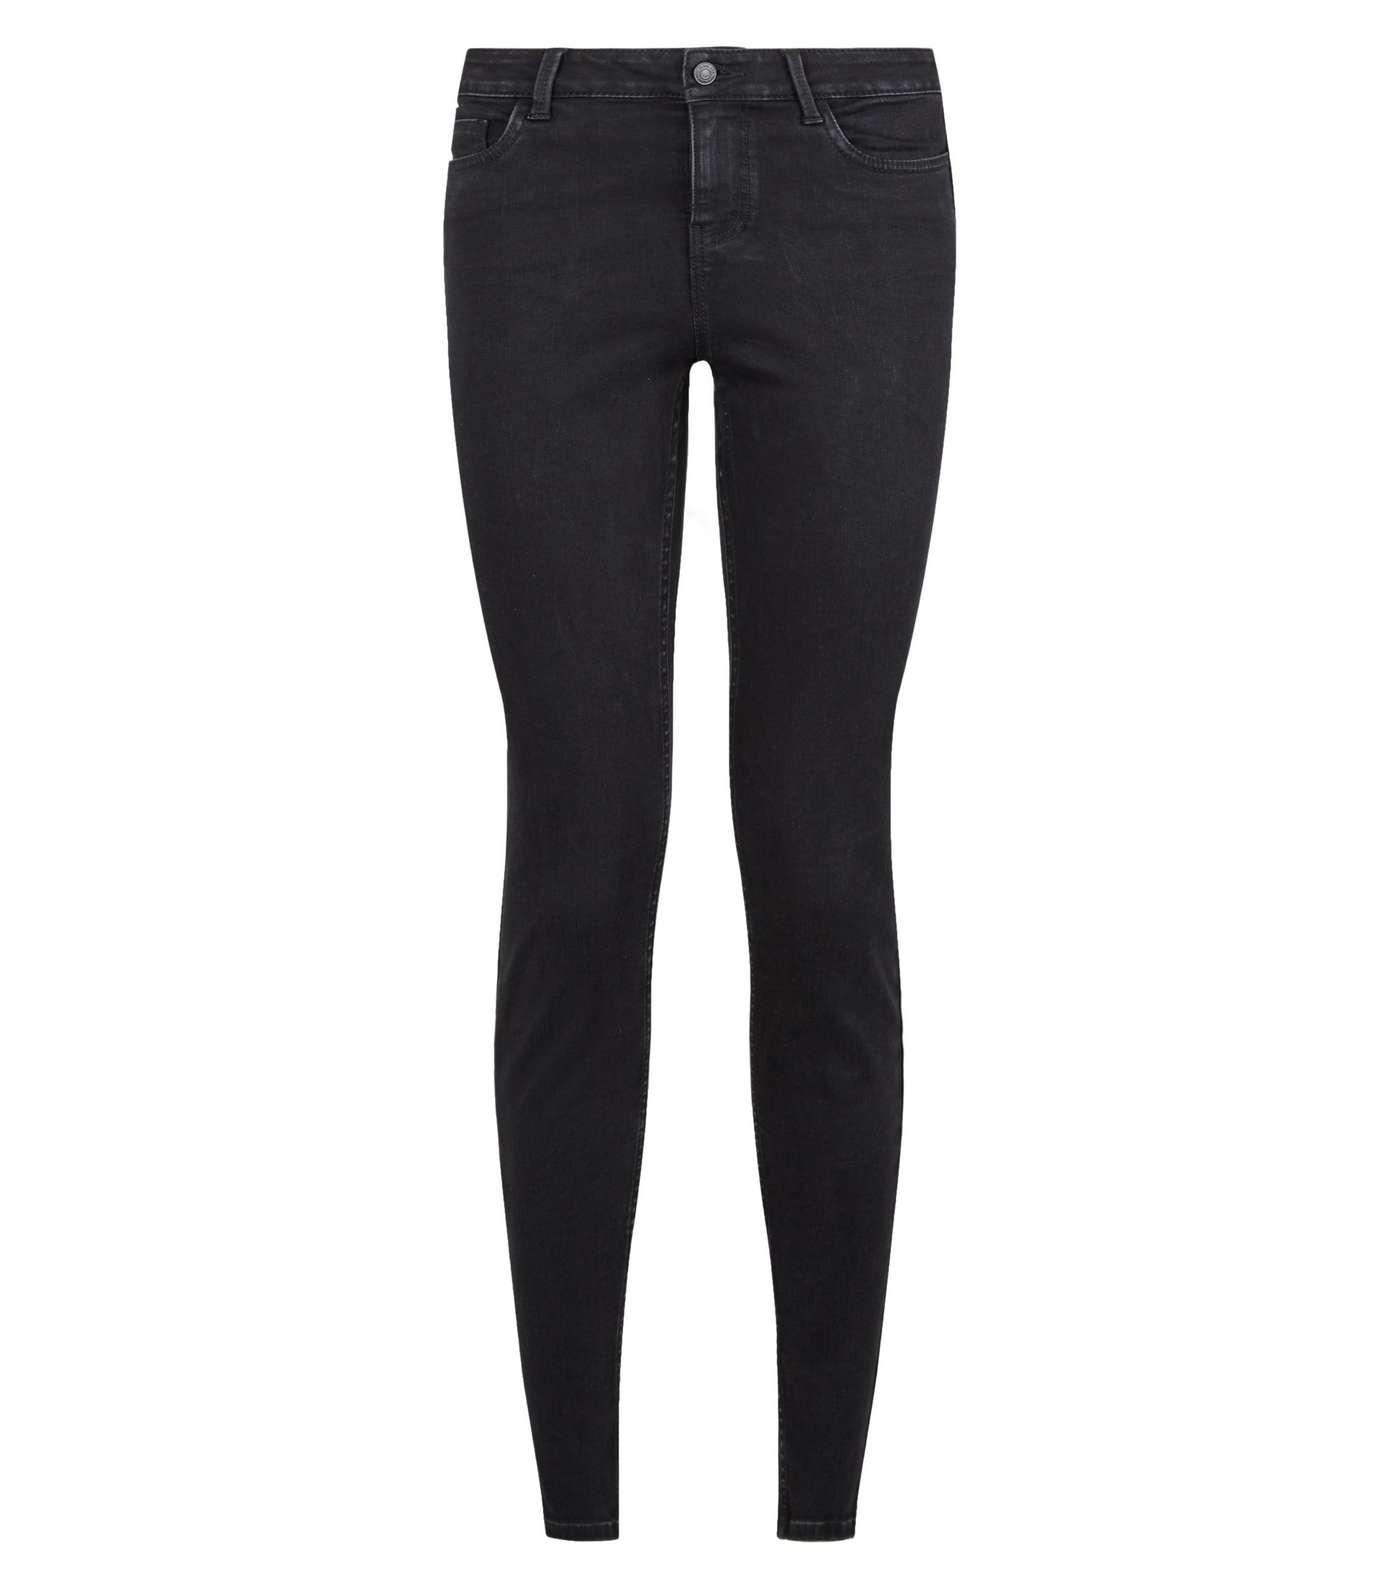 Black 'Lift & Shape' Jenna Skinny Jeans Image 4